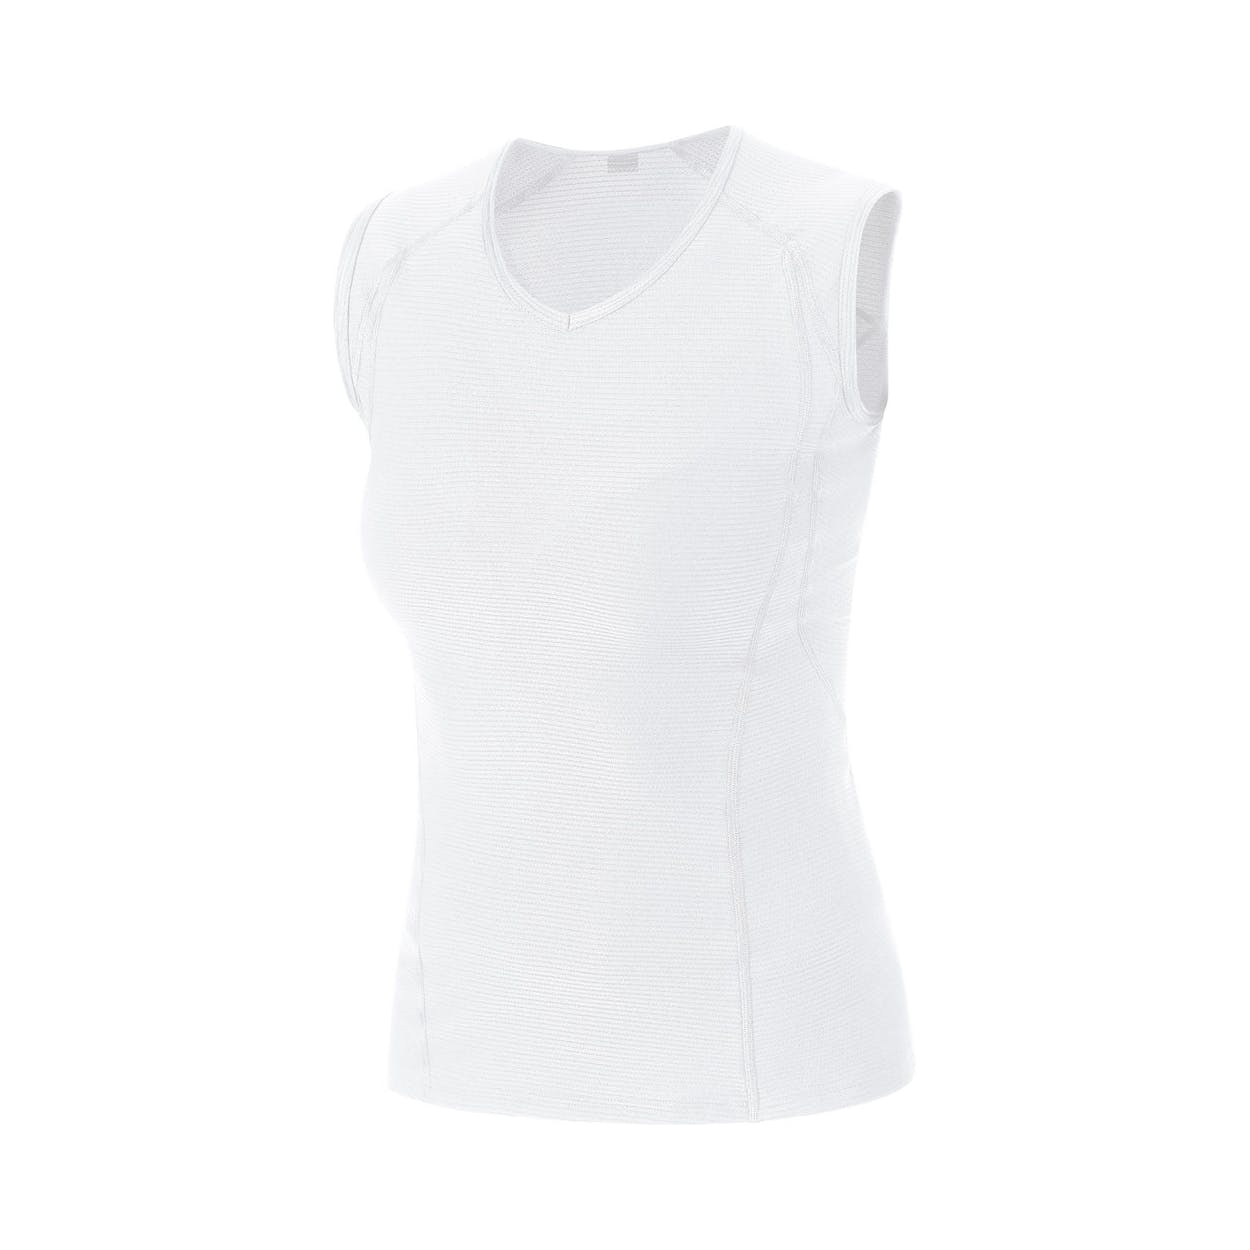 M Wmn BL Sleeveless Shirt white 36